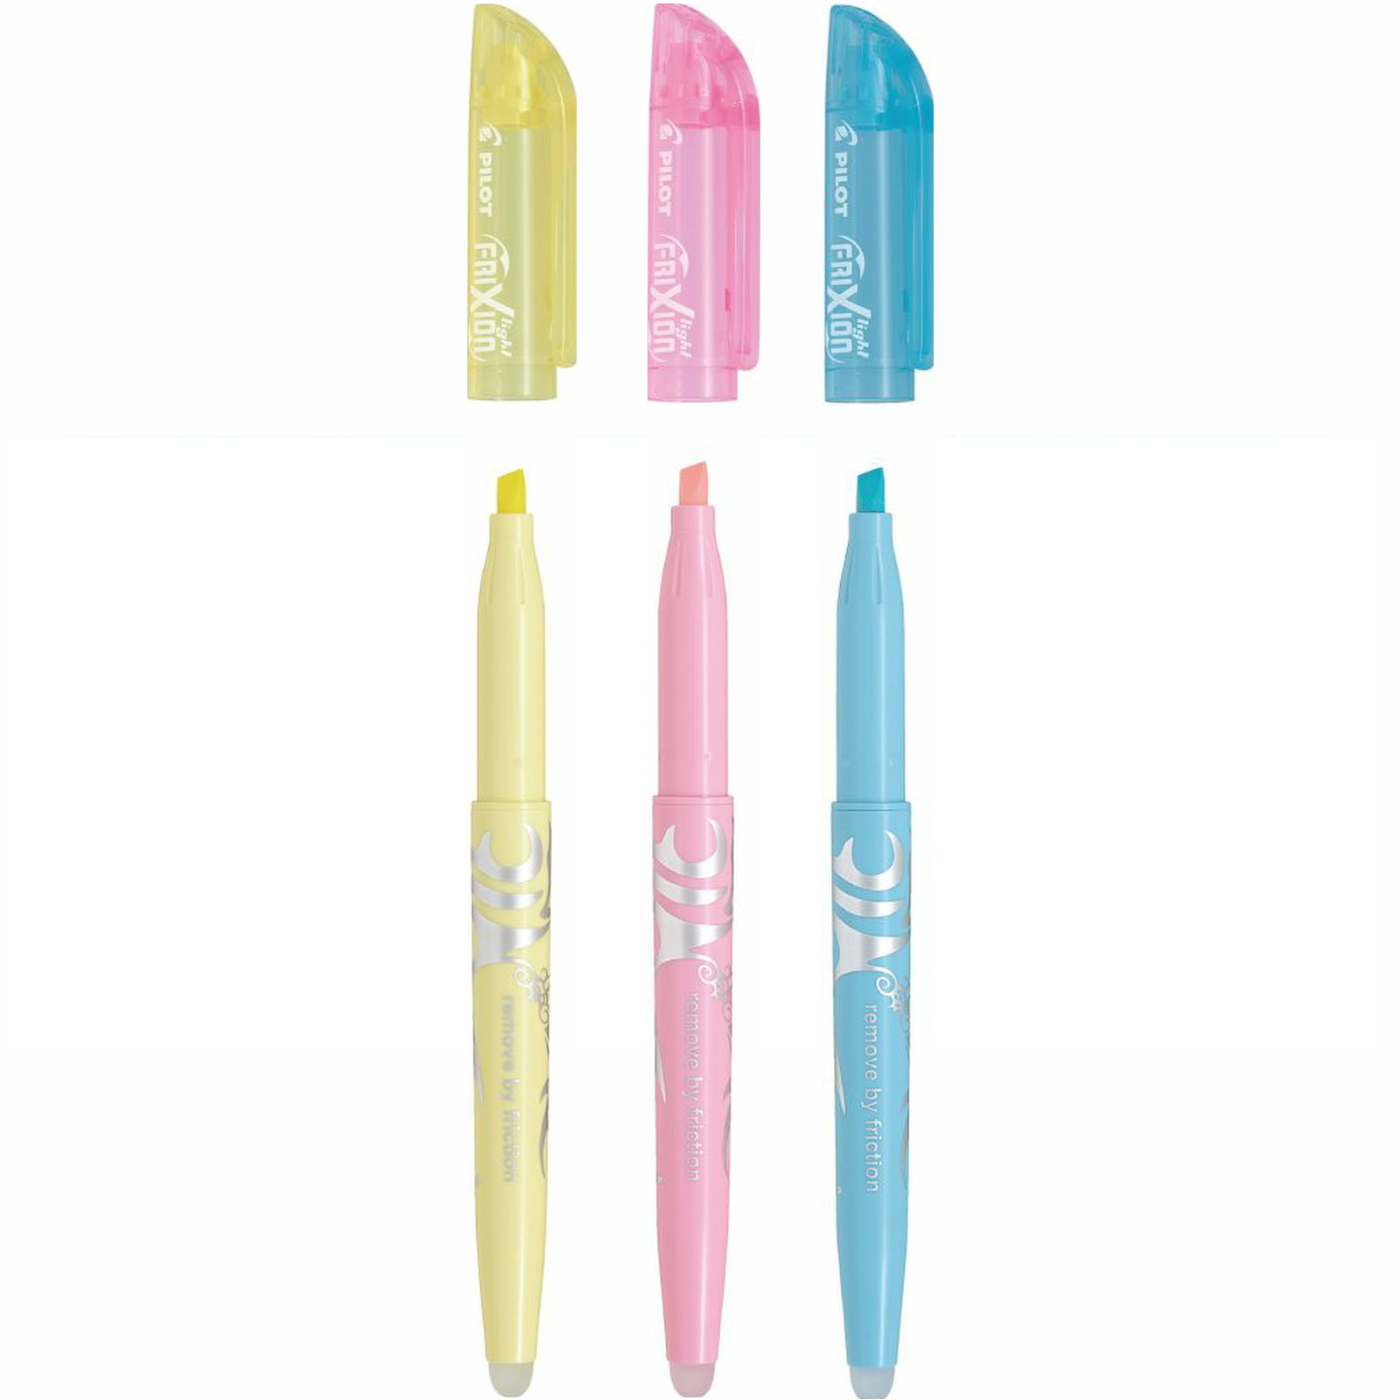 Pilot FriXion Light Soft Erasable Pastel Highlighter Triple Blister 3pk - Pastel Yellow, Pink, Blue